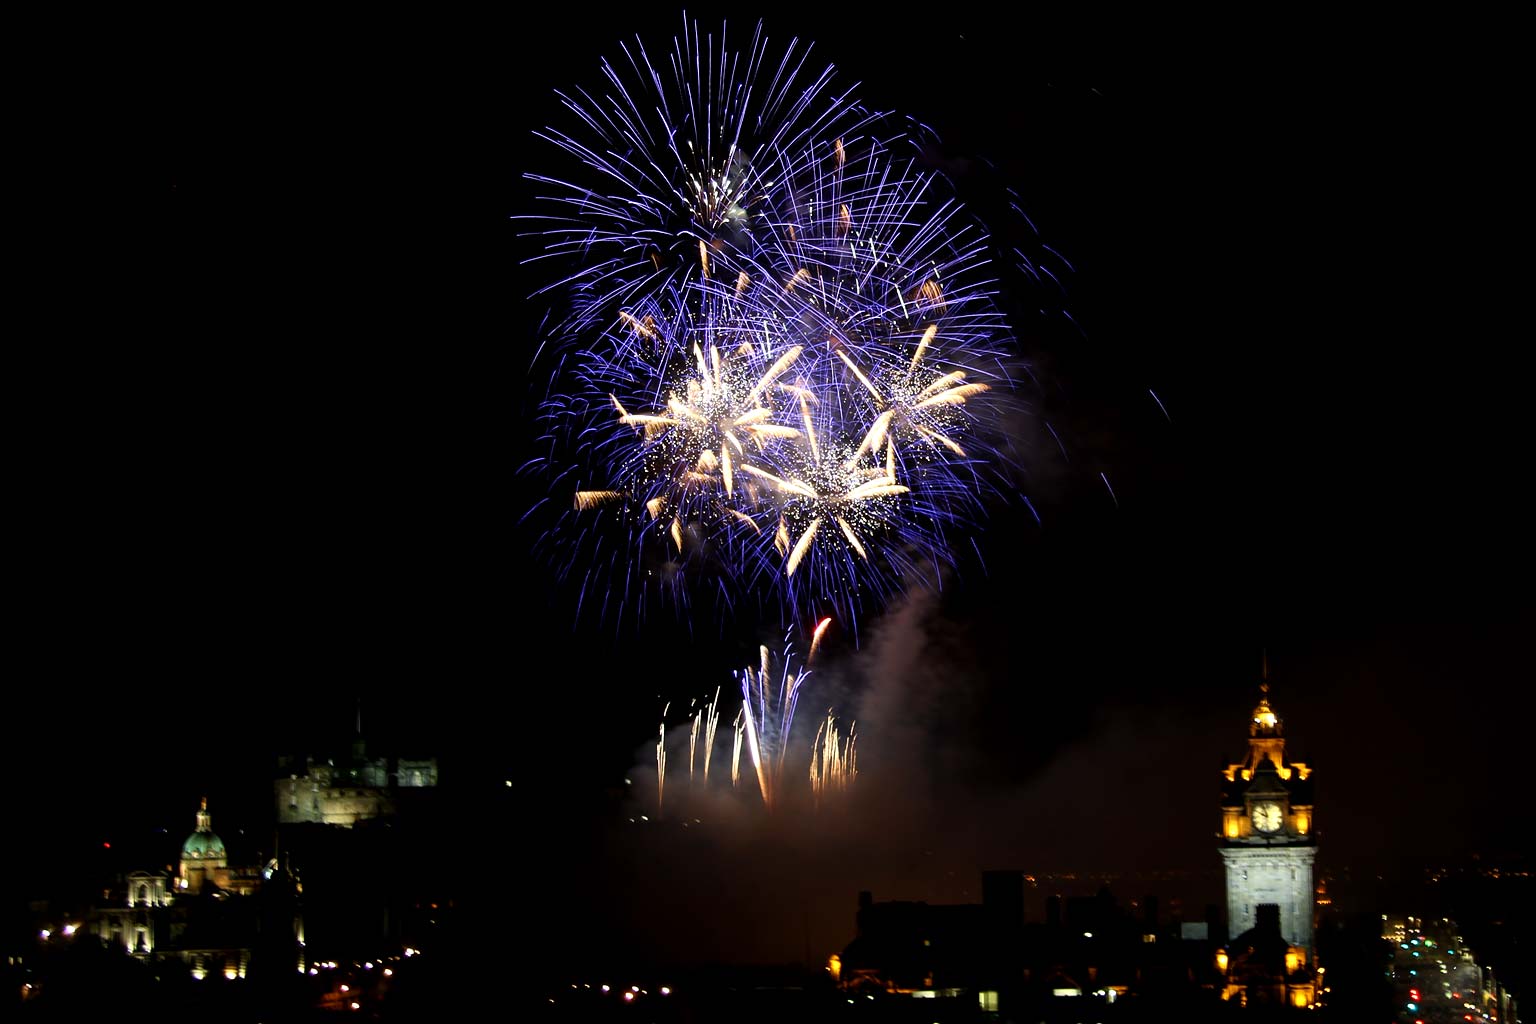 Edinburgh International Festival - Virgin Money Fireworks Concert, 2011